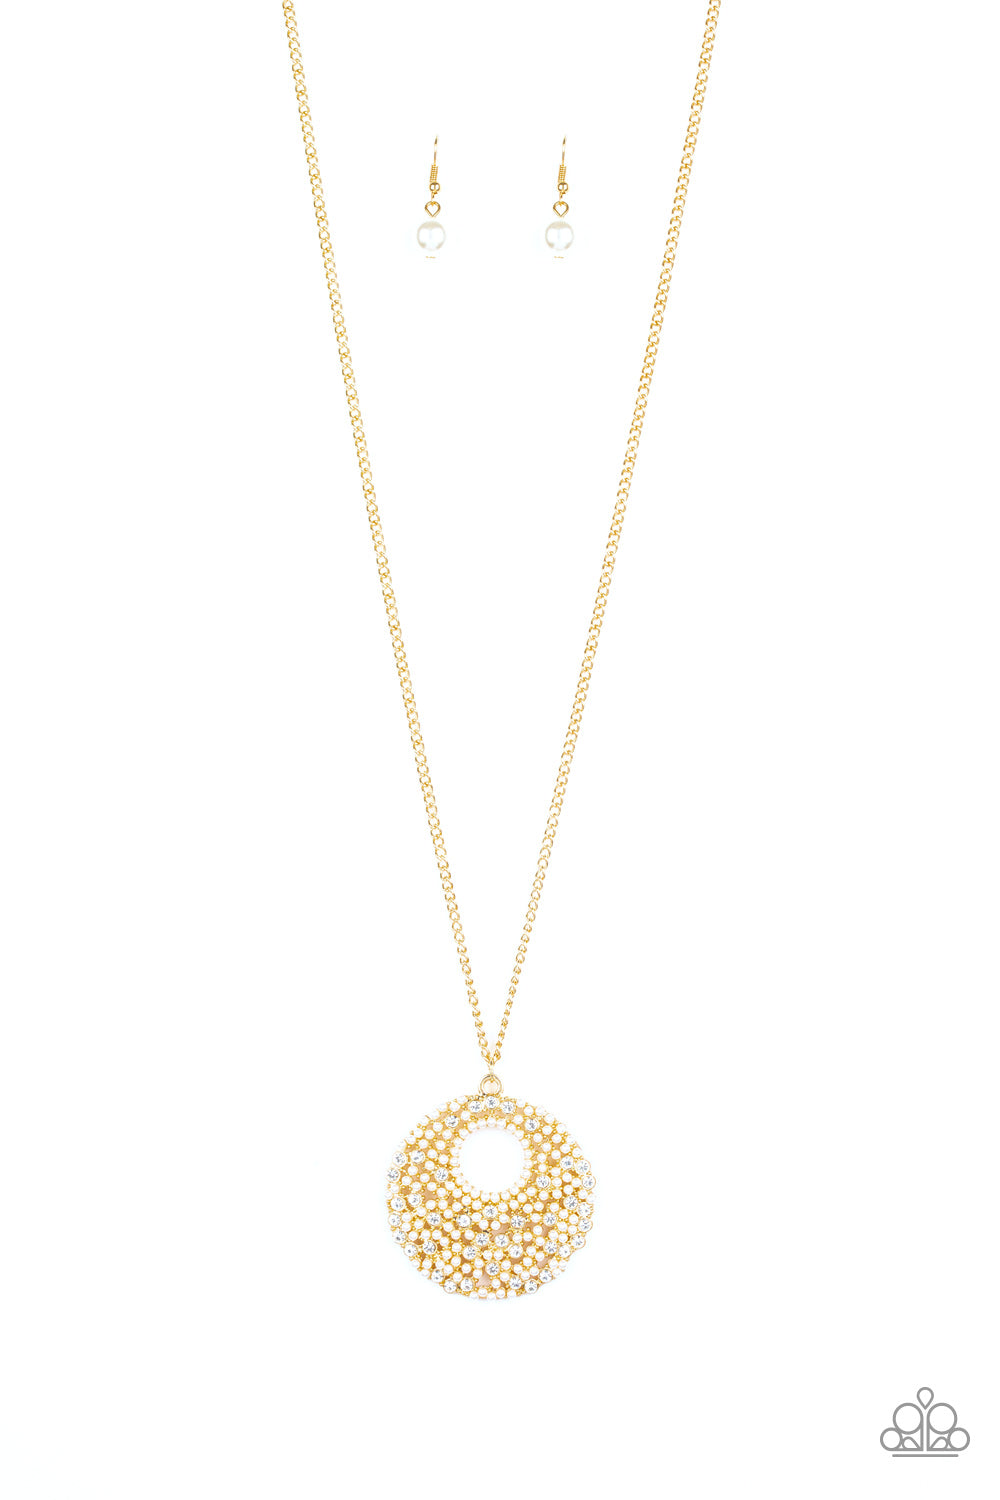 Paparazzi Accessories - Pearl Panache - Gold Necklace